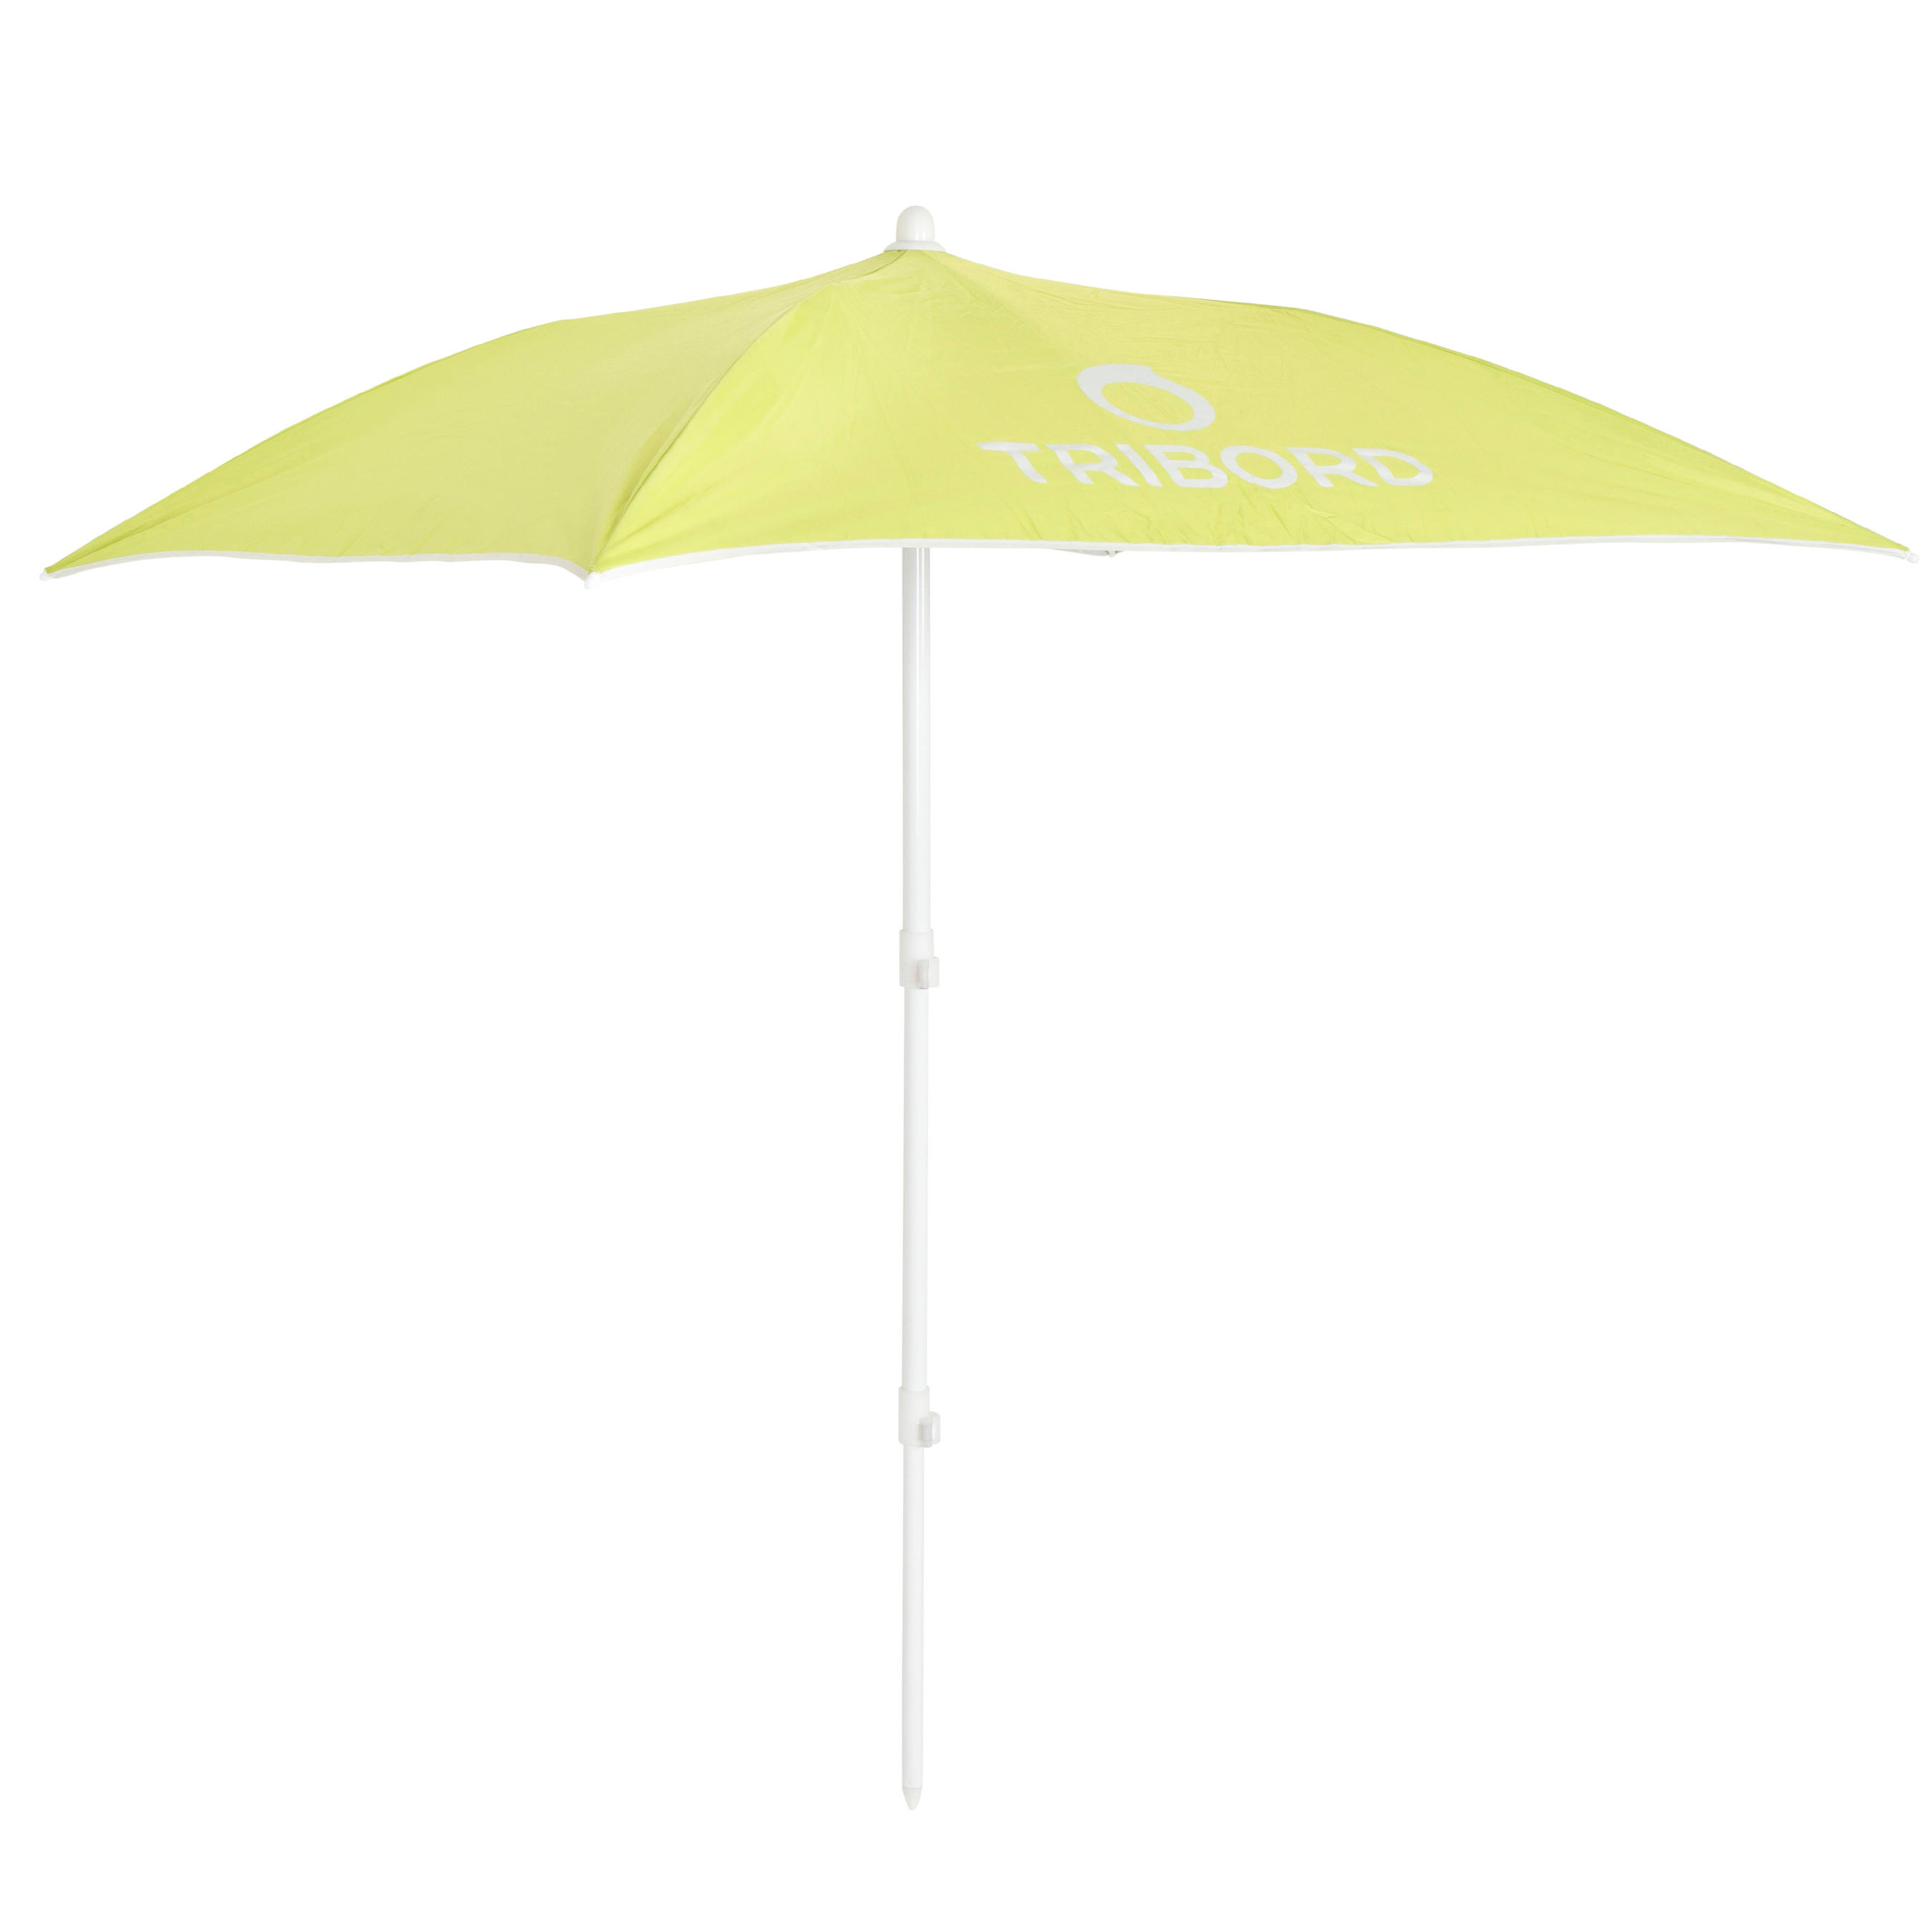 tribord parasol decathlon